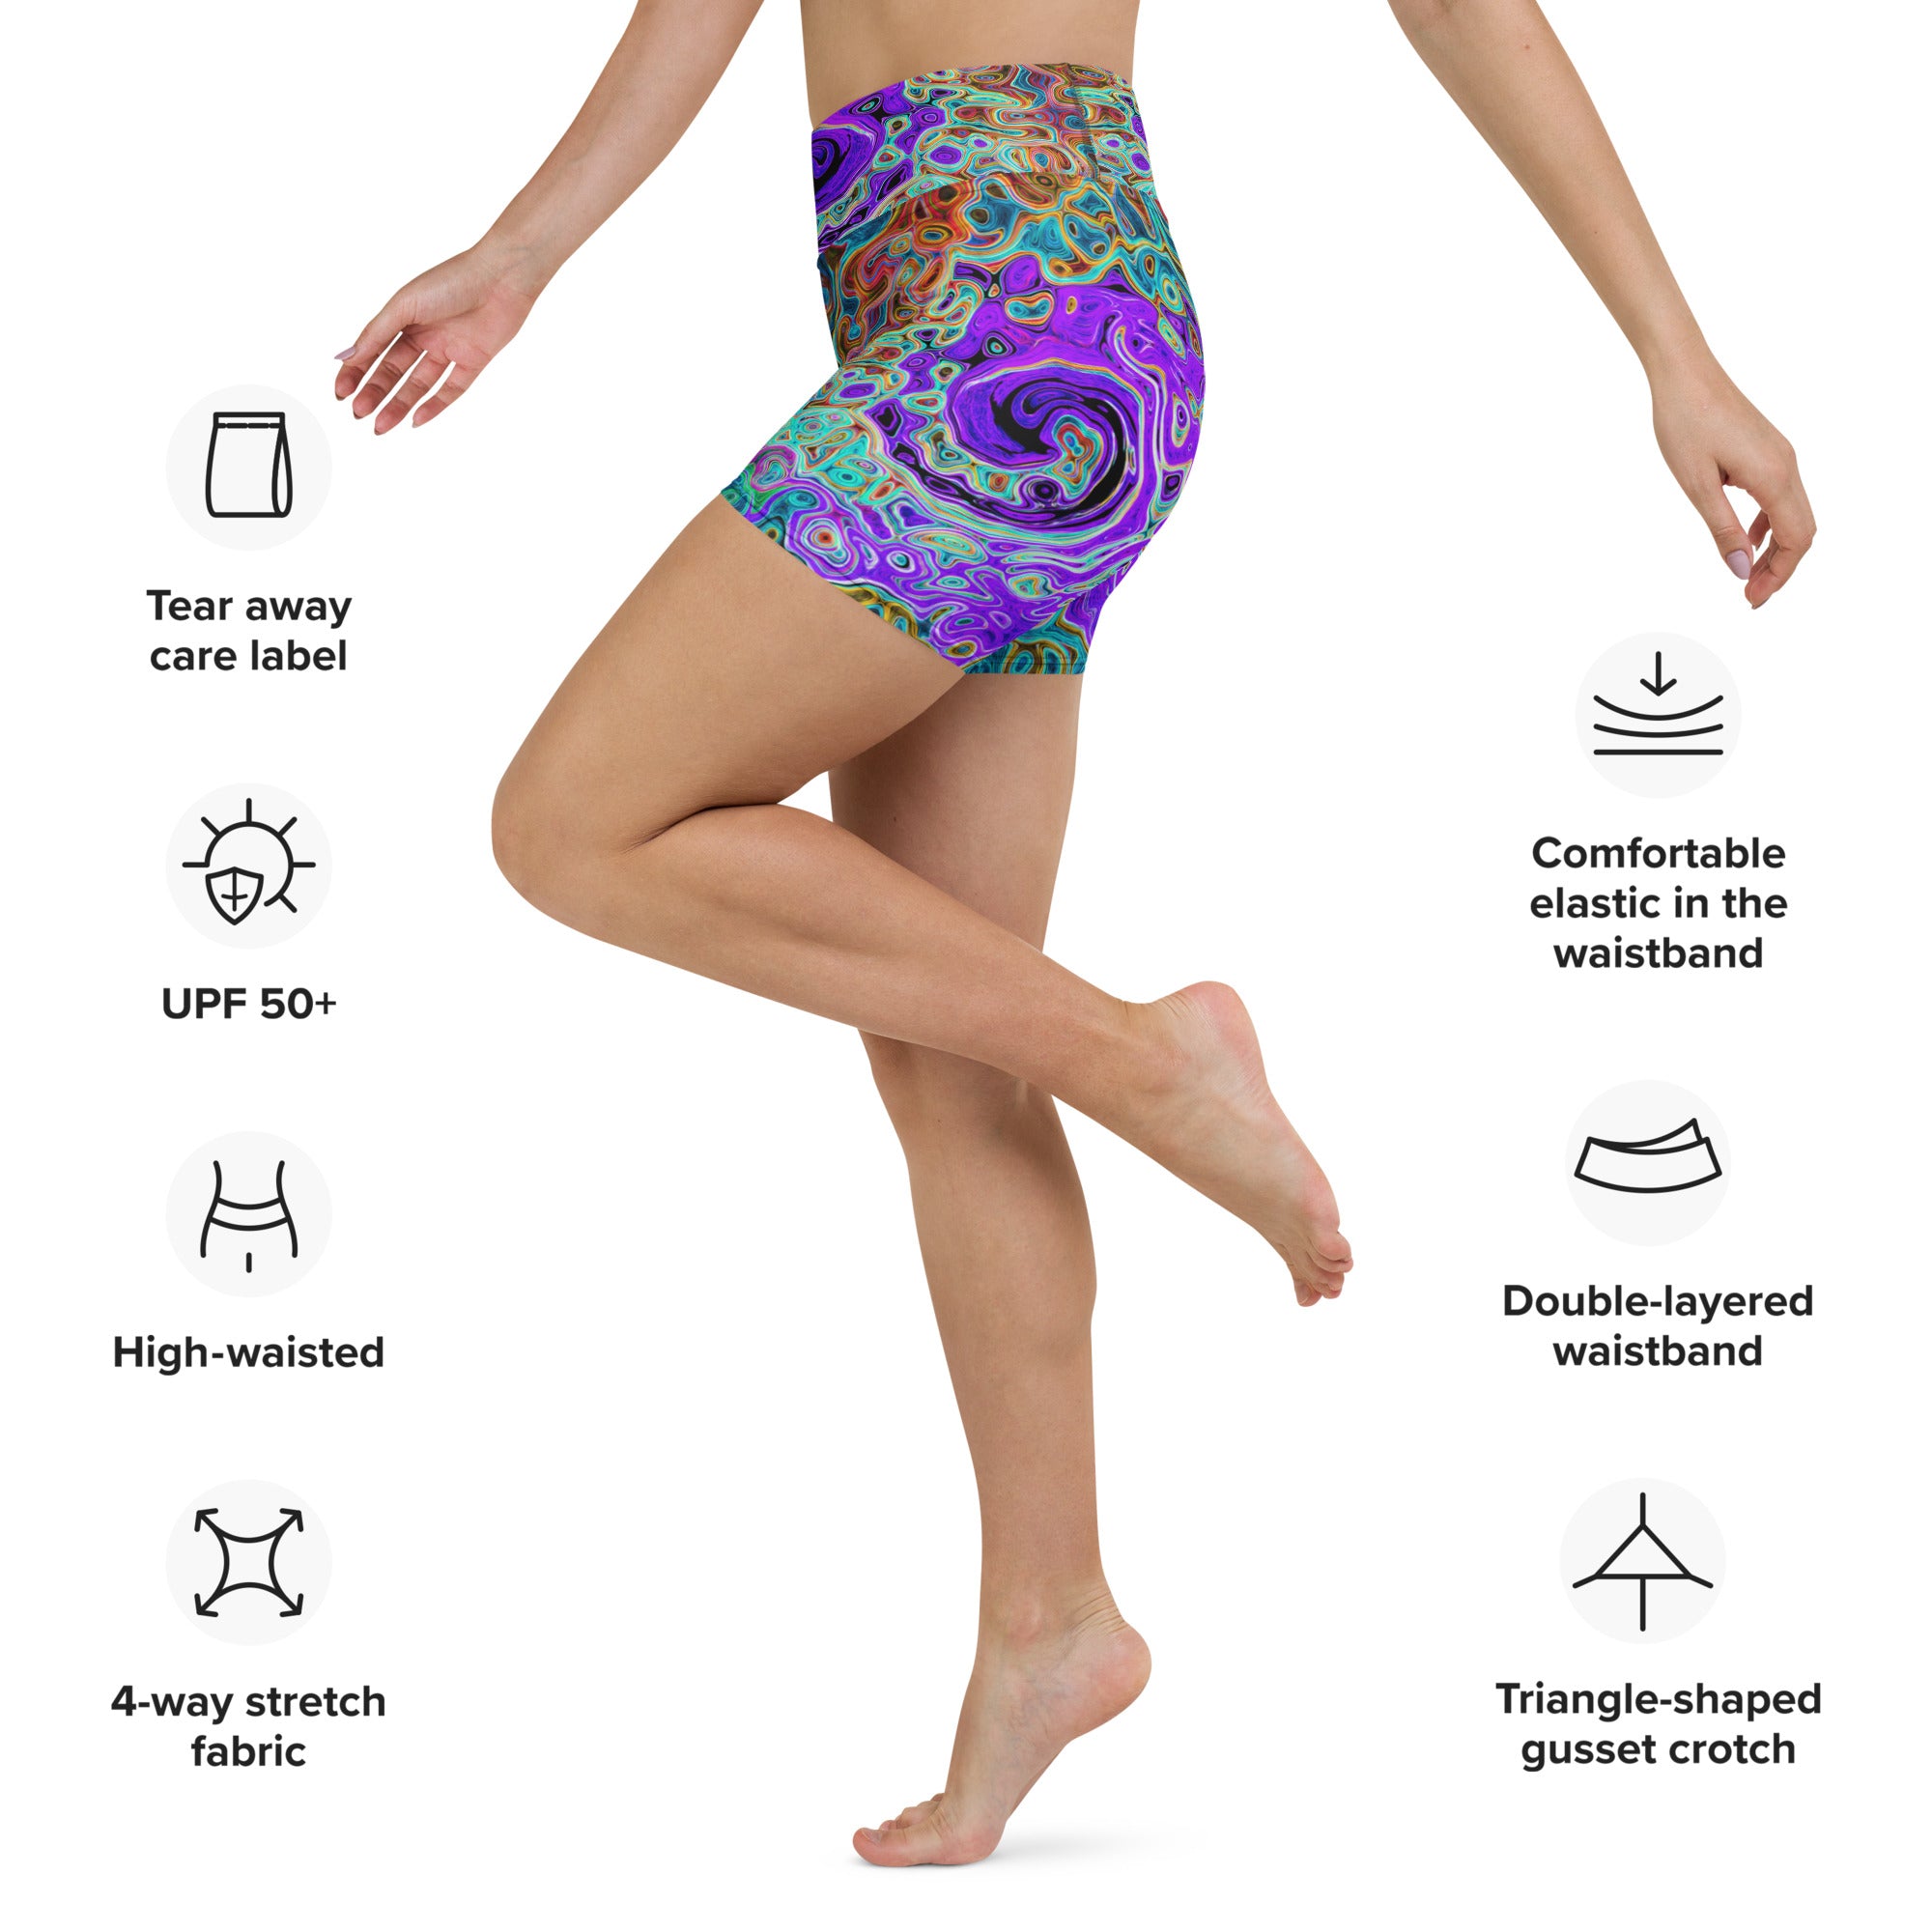 Yoga Shorts - Purple Colorful Groovy Abstract Retro Liquid Swirl